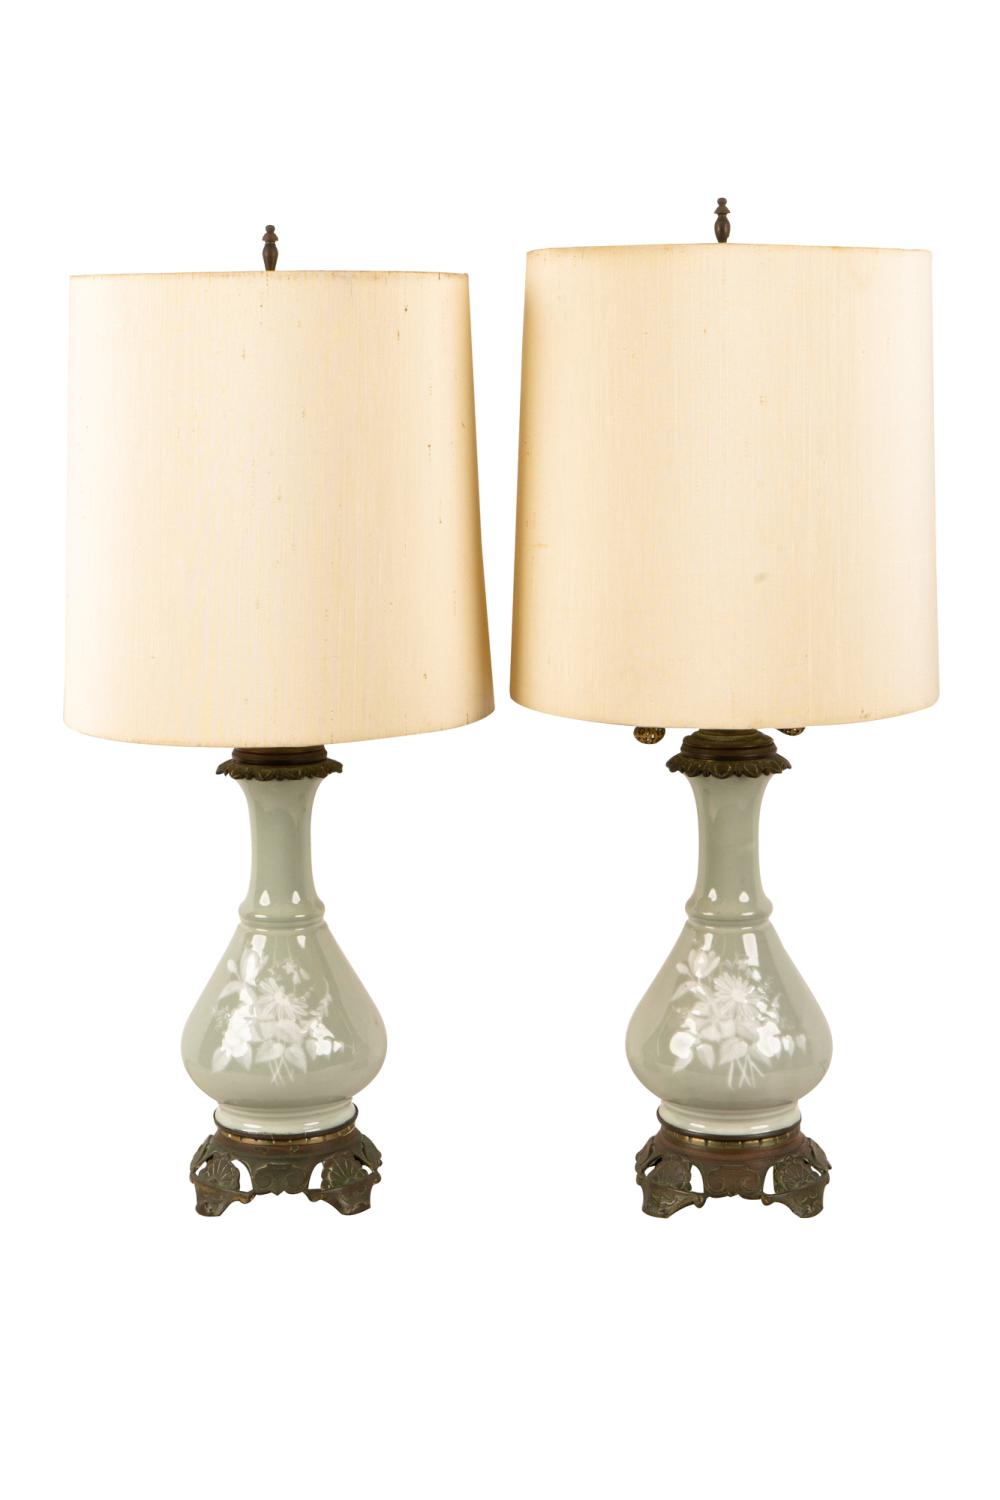 PAIR OF CELADON GLAZED TABLE LAMPSeach 3374c1